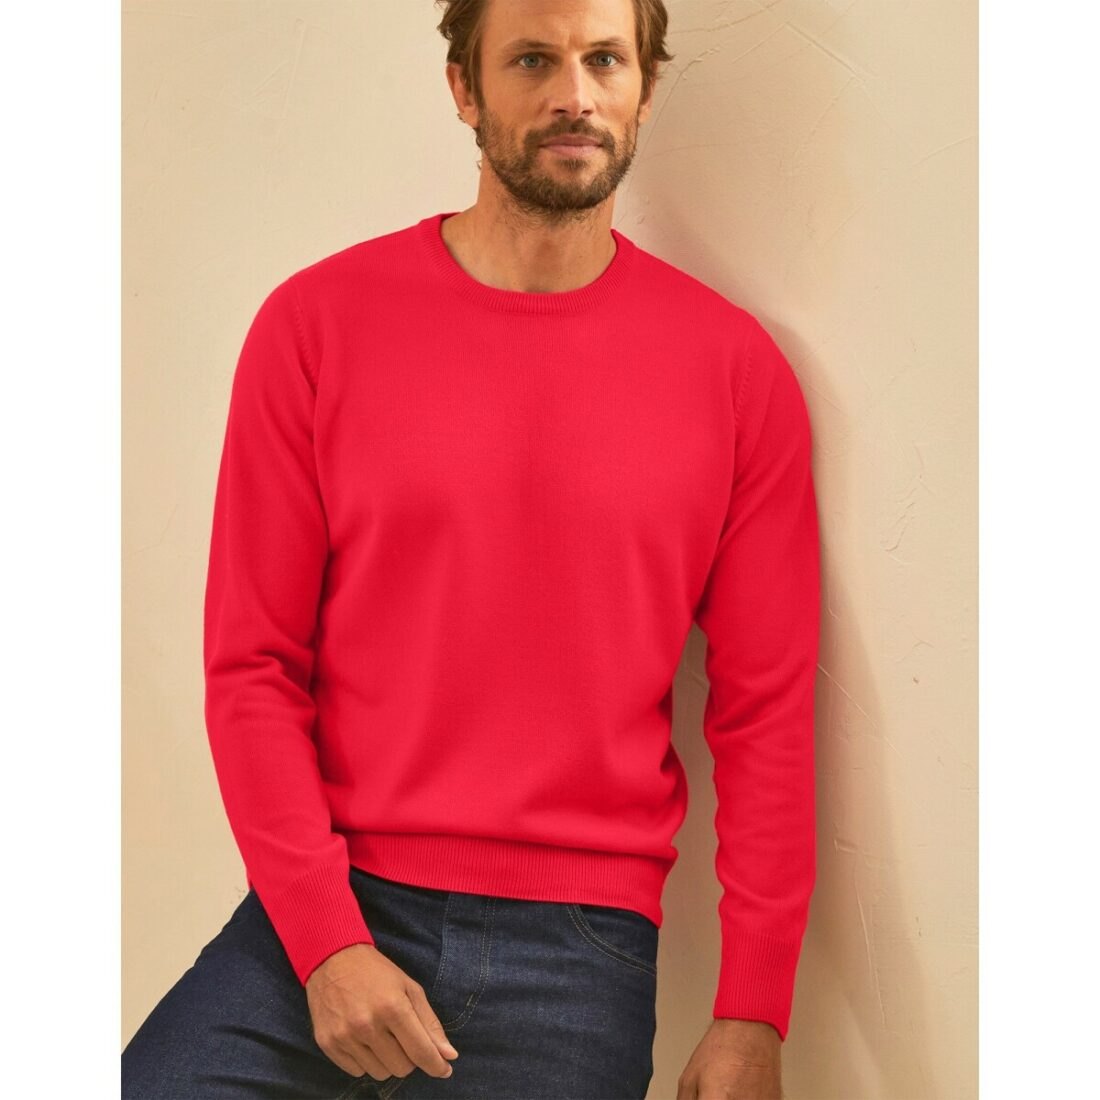 Jednobarevný pulovr s kulatým výstřihem